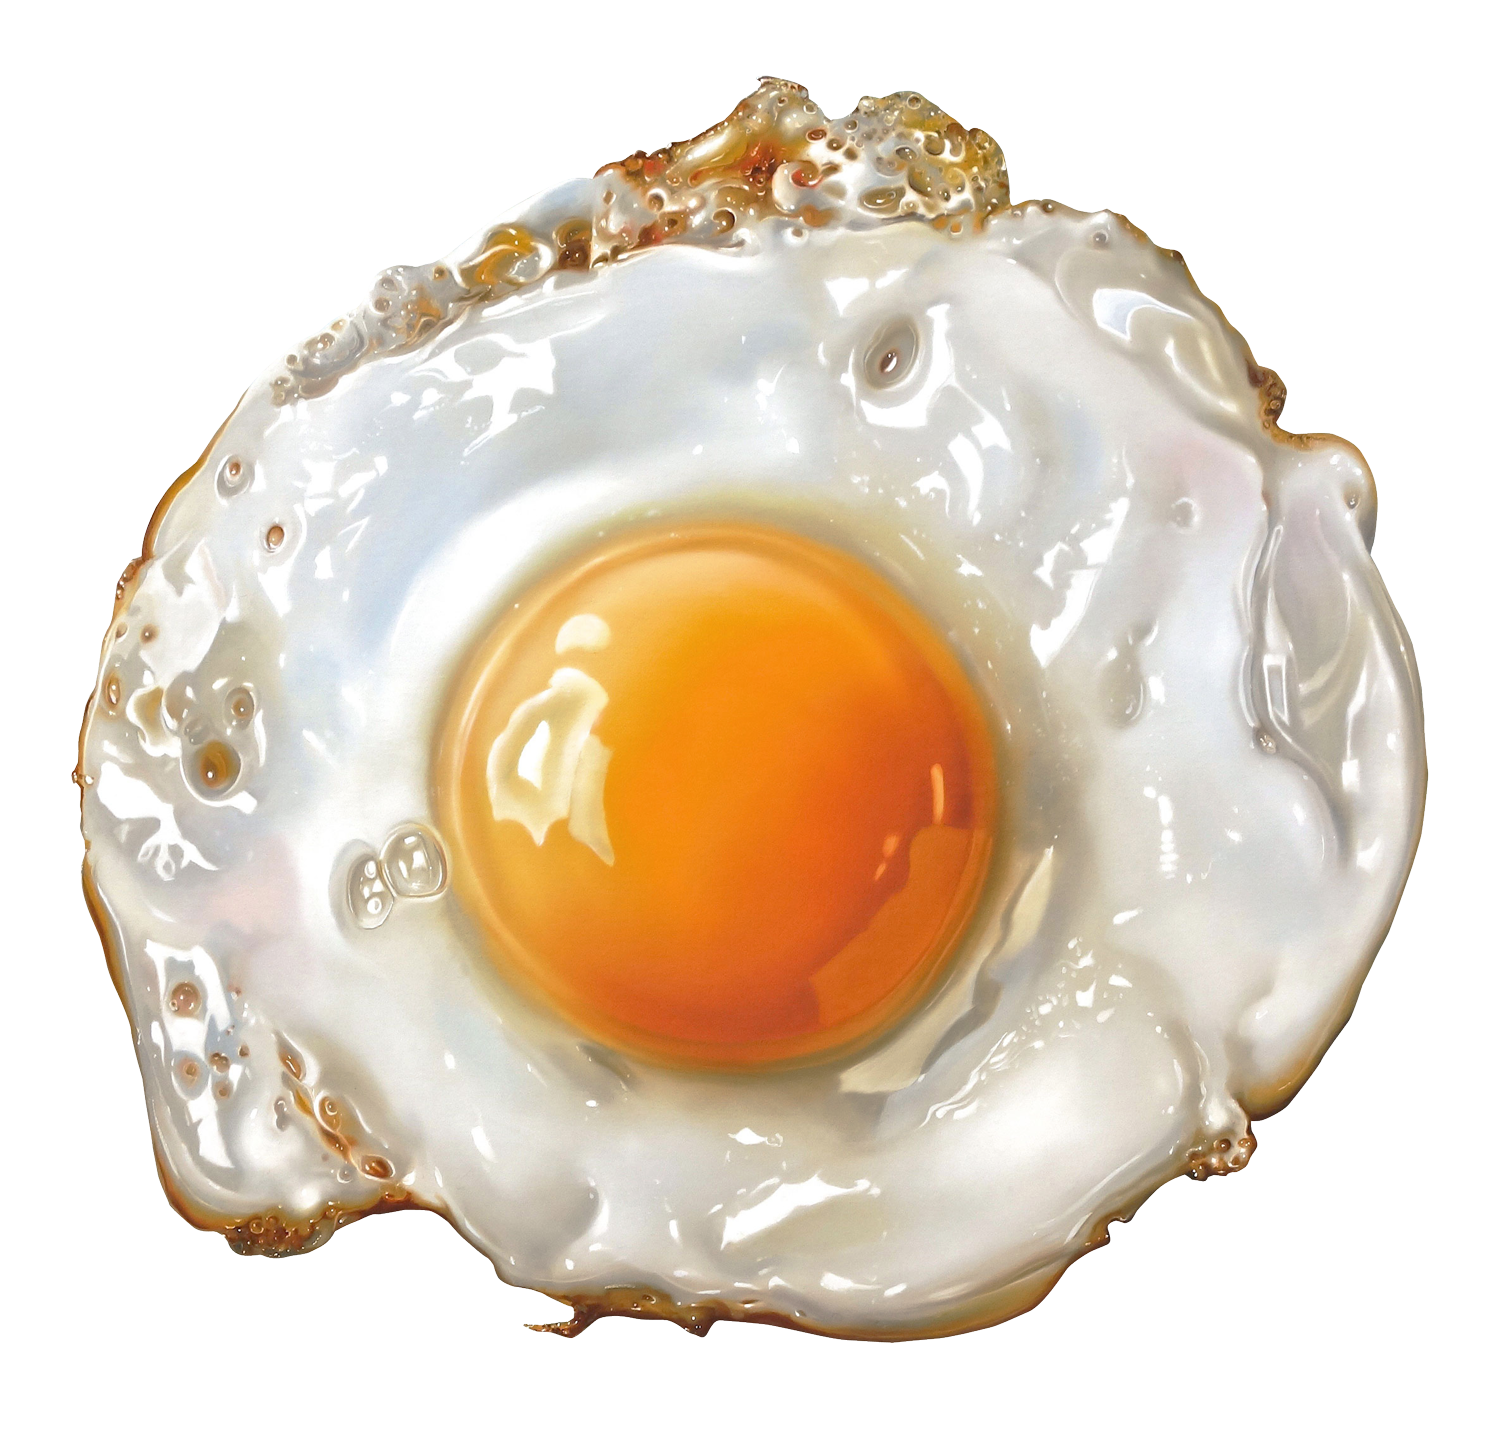 Fried egg PNG transparent image download, size: 2076x2267px